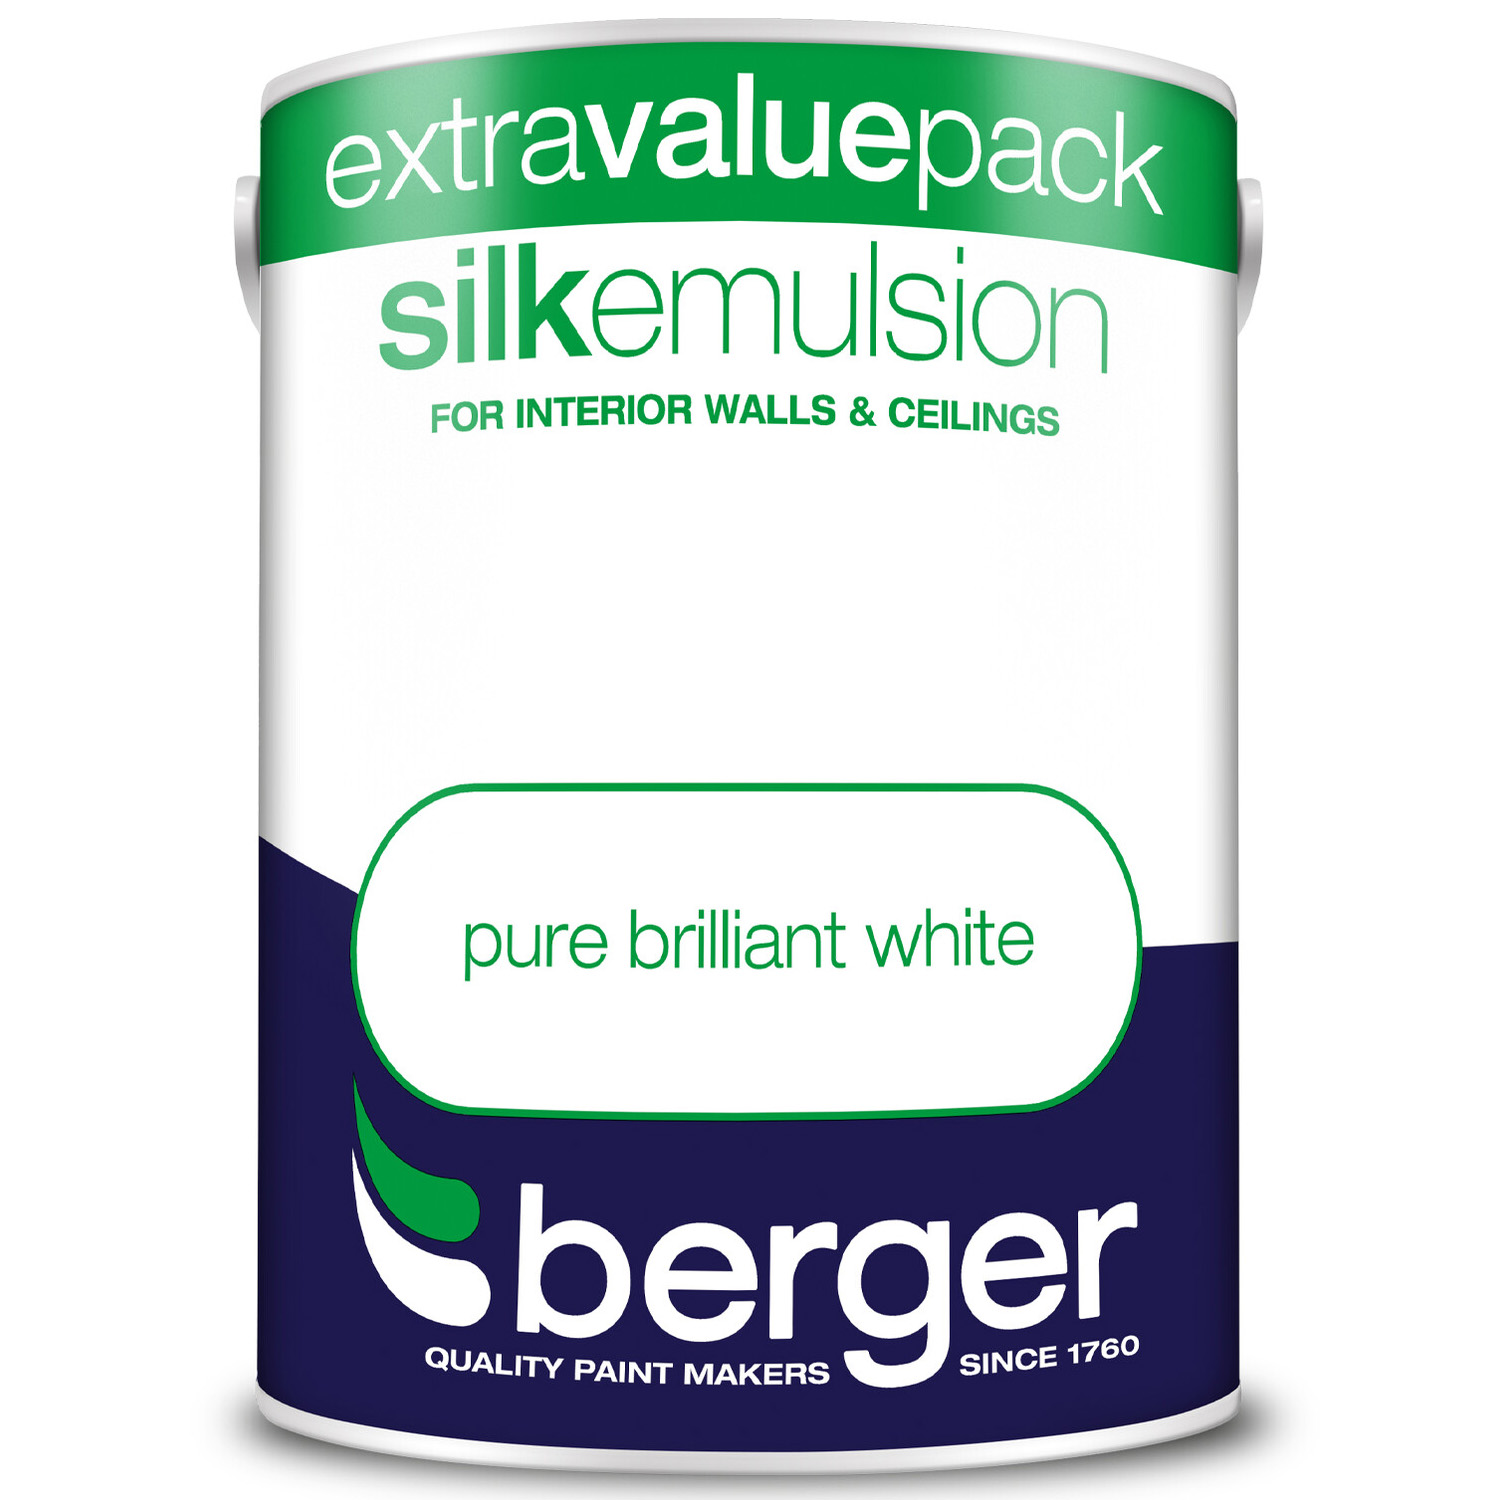 Berger Walls & Ceilings Pure Brilliant White Silk Emulsion Paint 5L Image 2